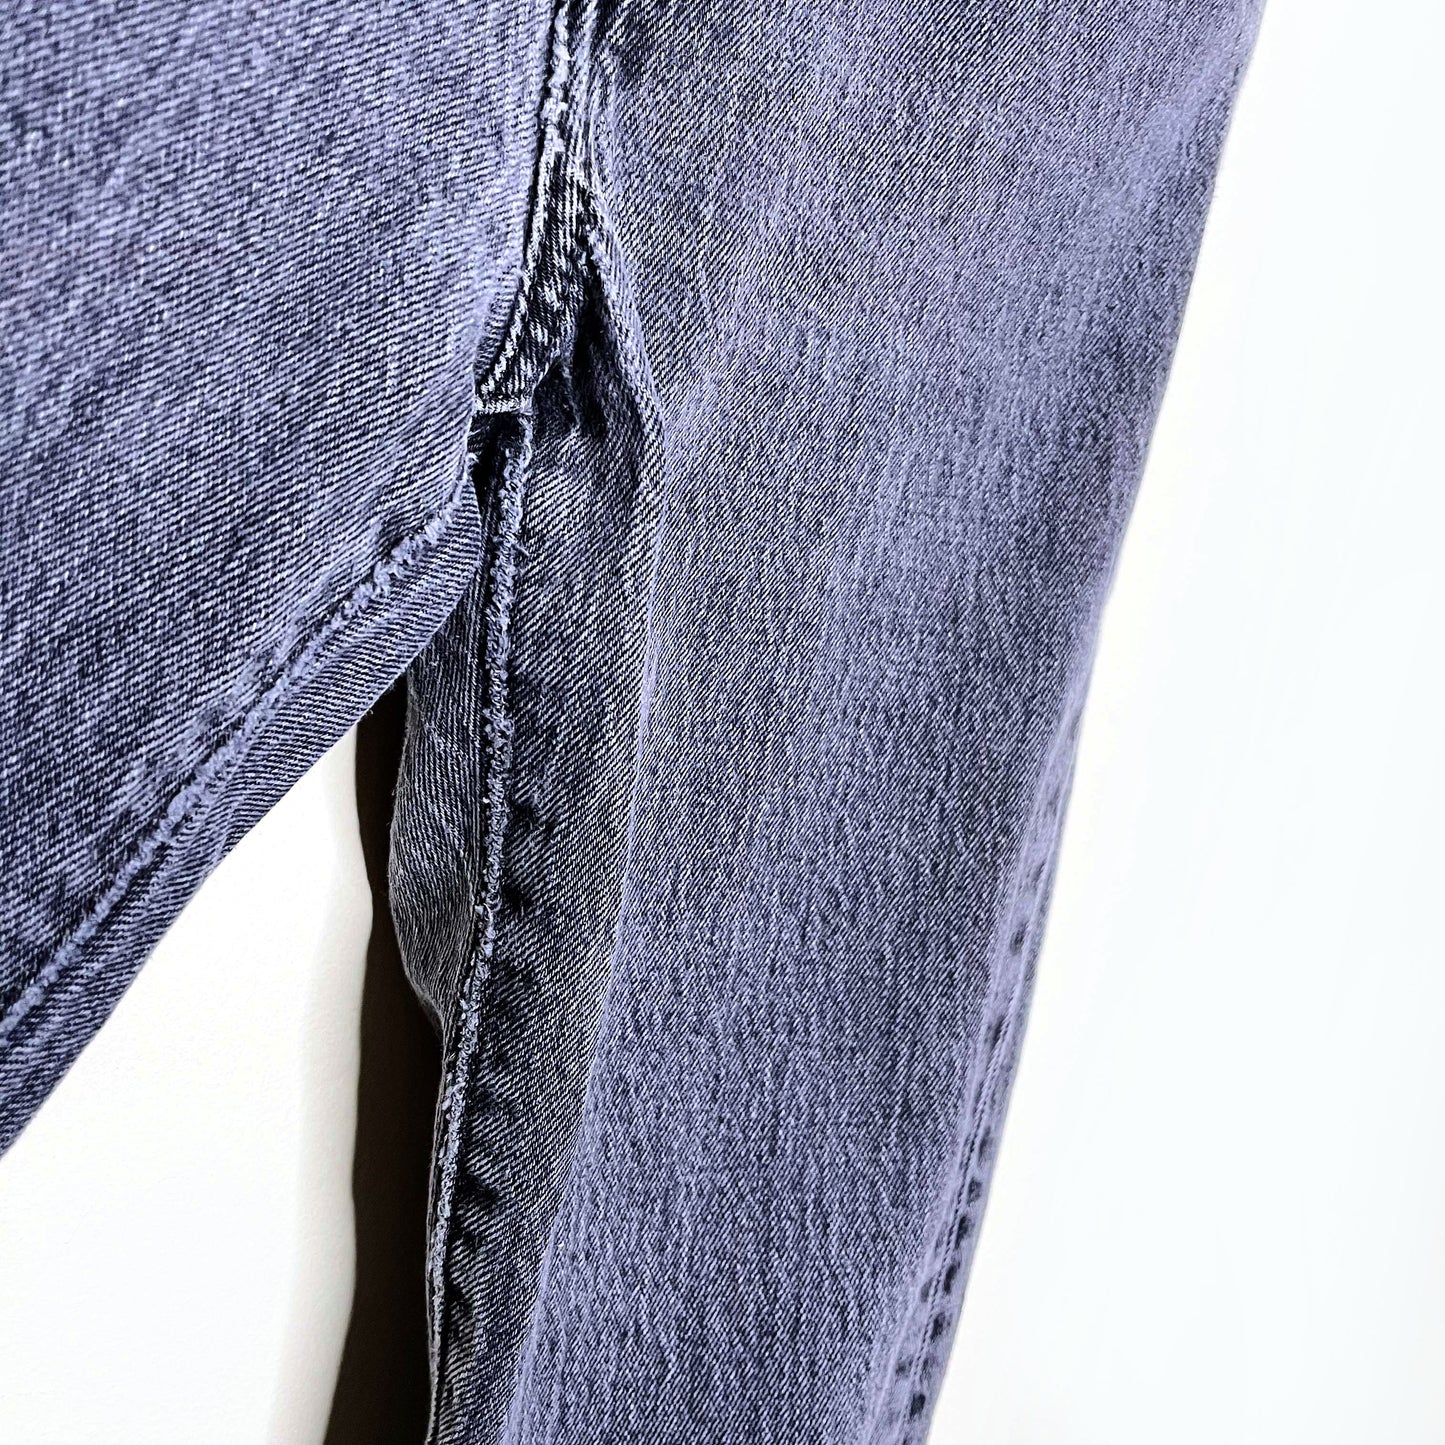 levi's faded black wedgie straight raw hem jeans - size 29